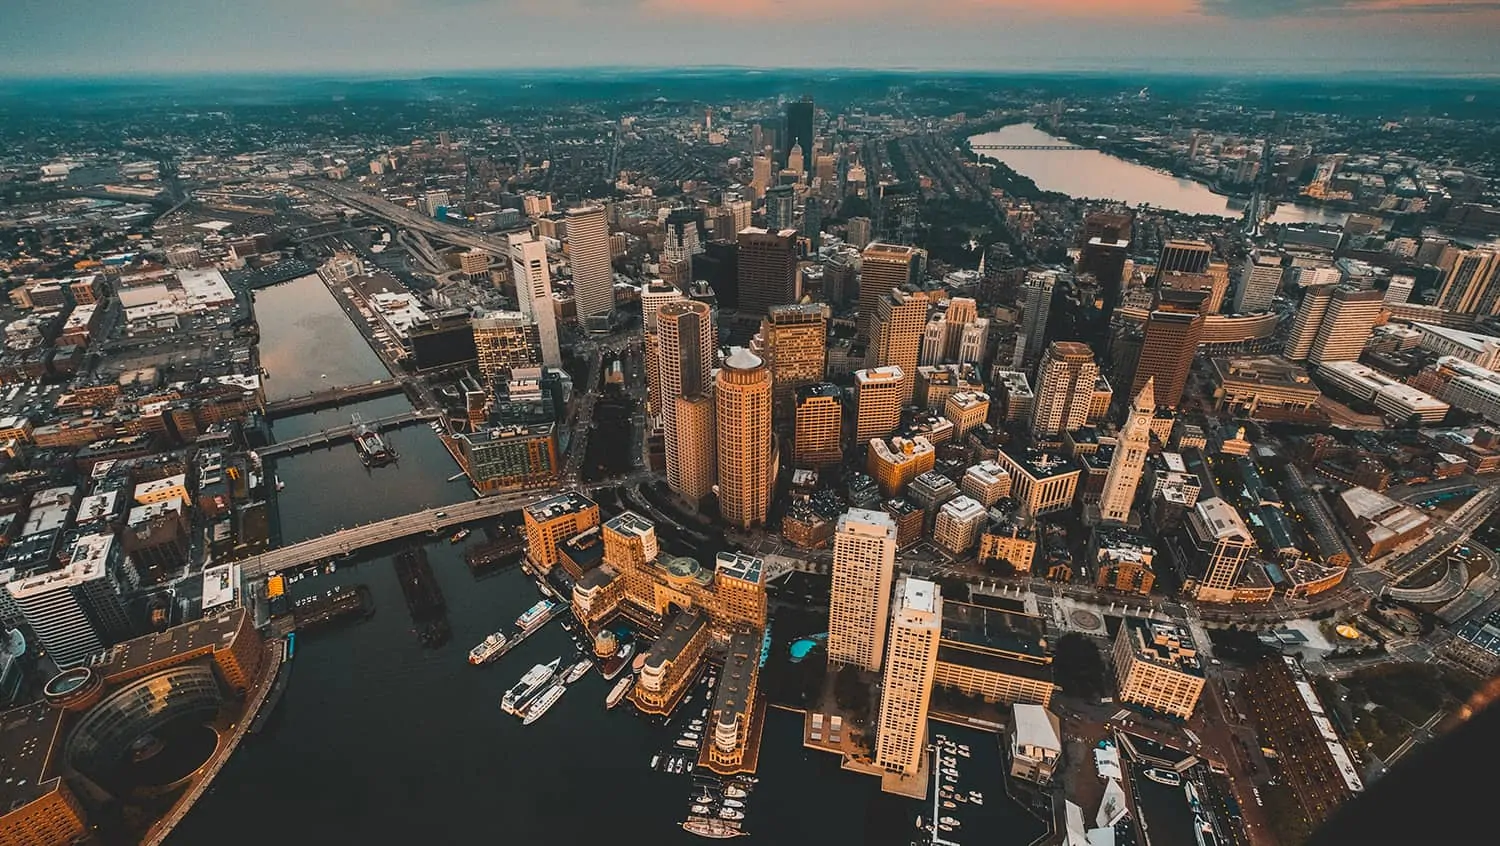 An image of Boston